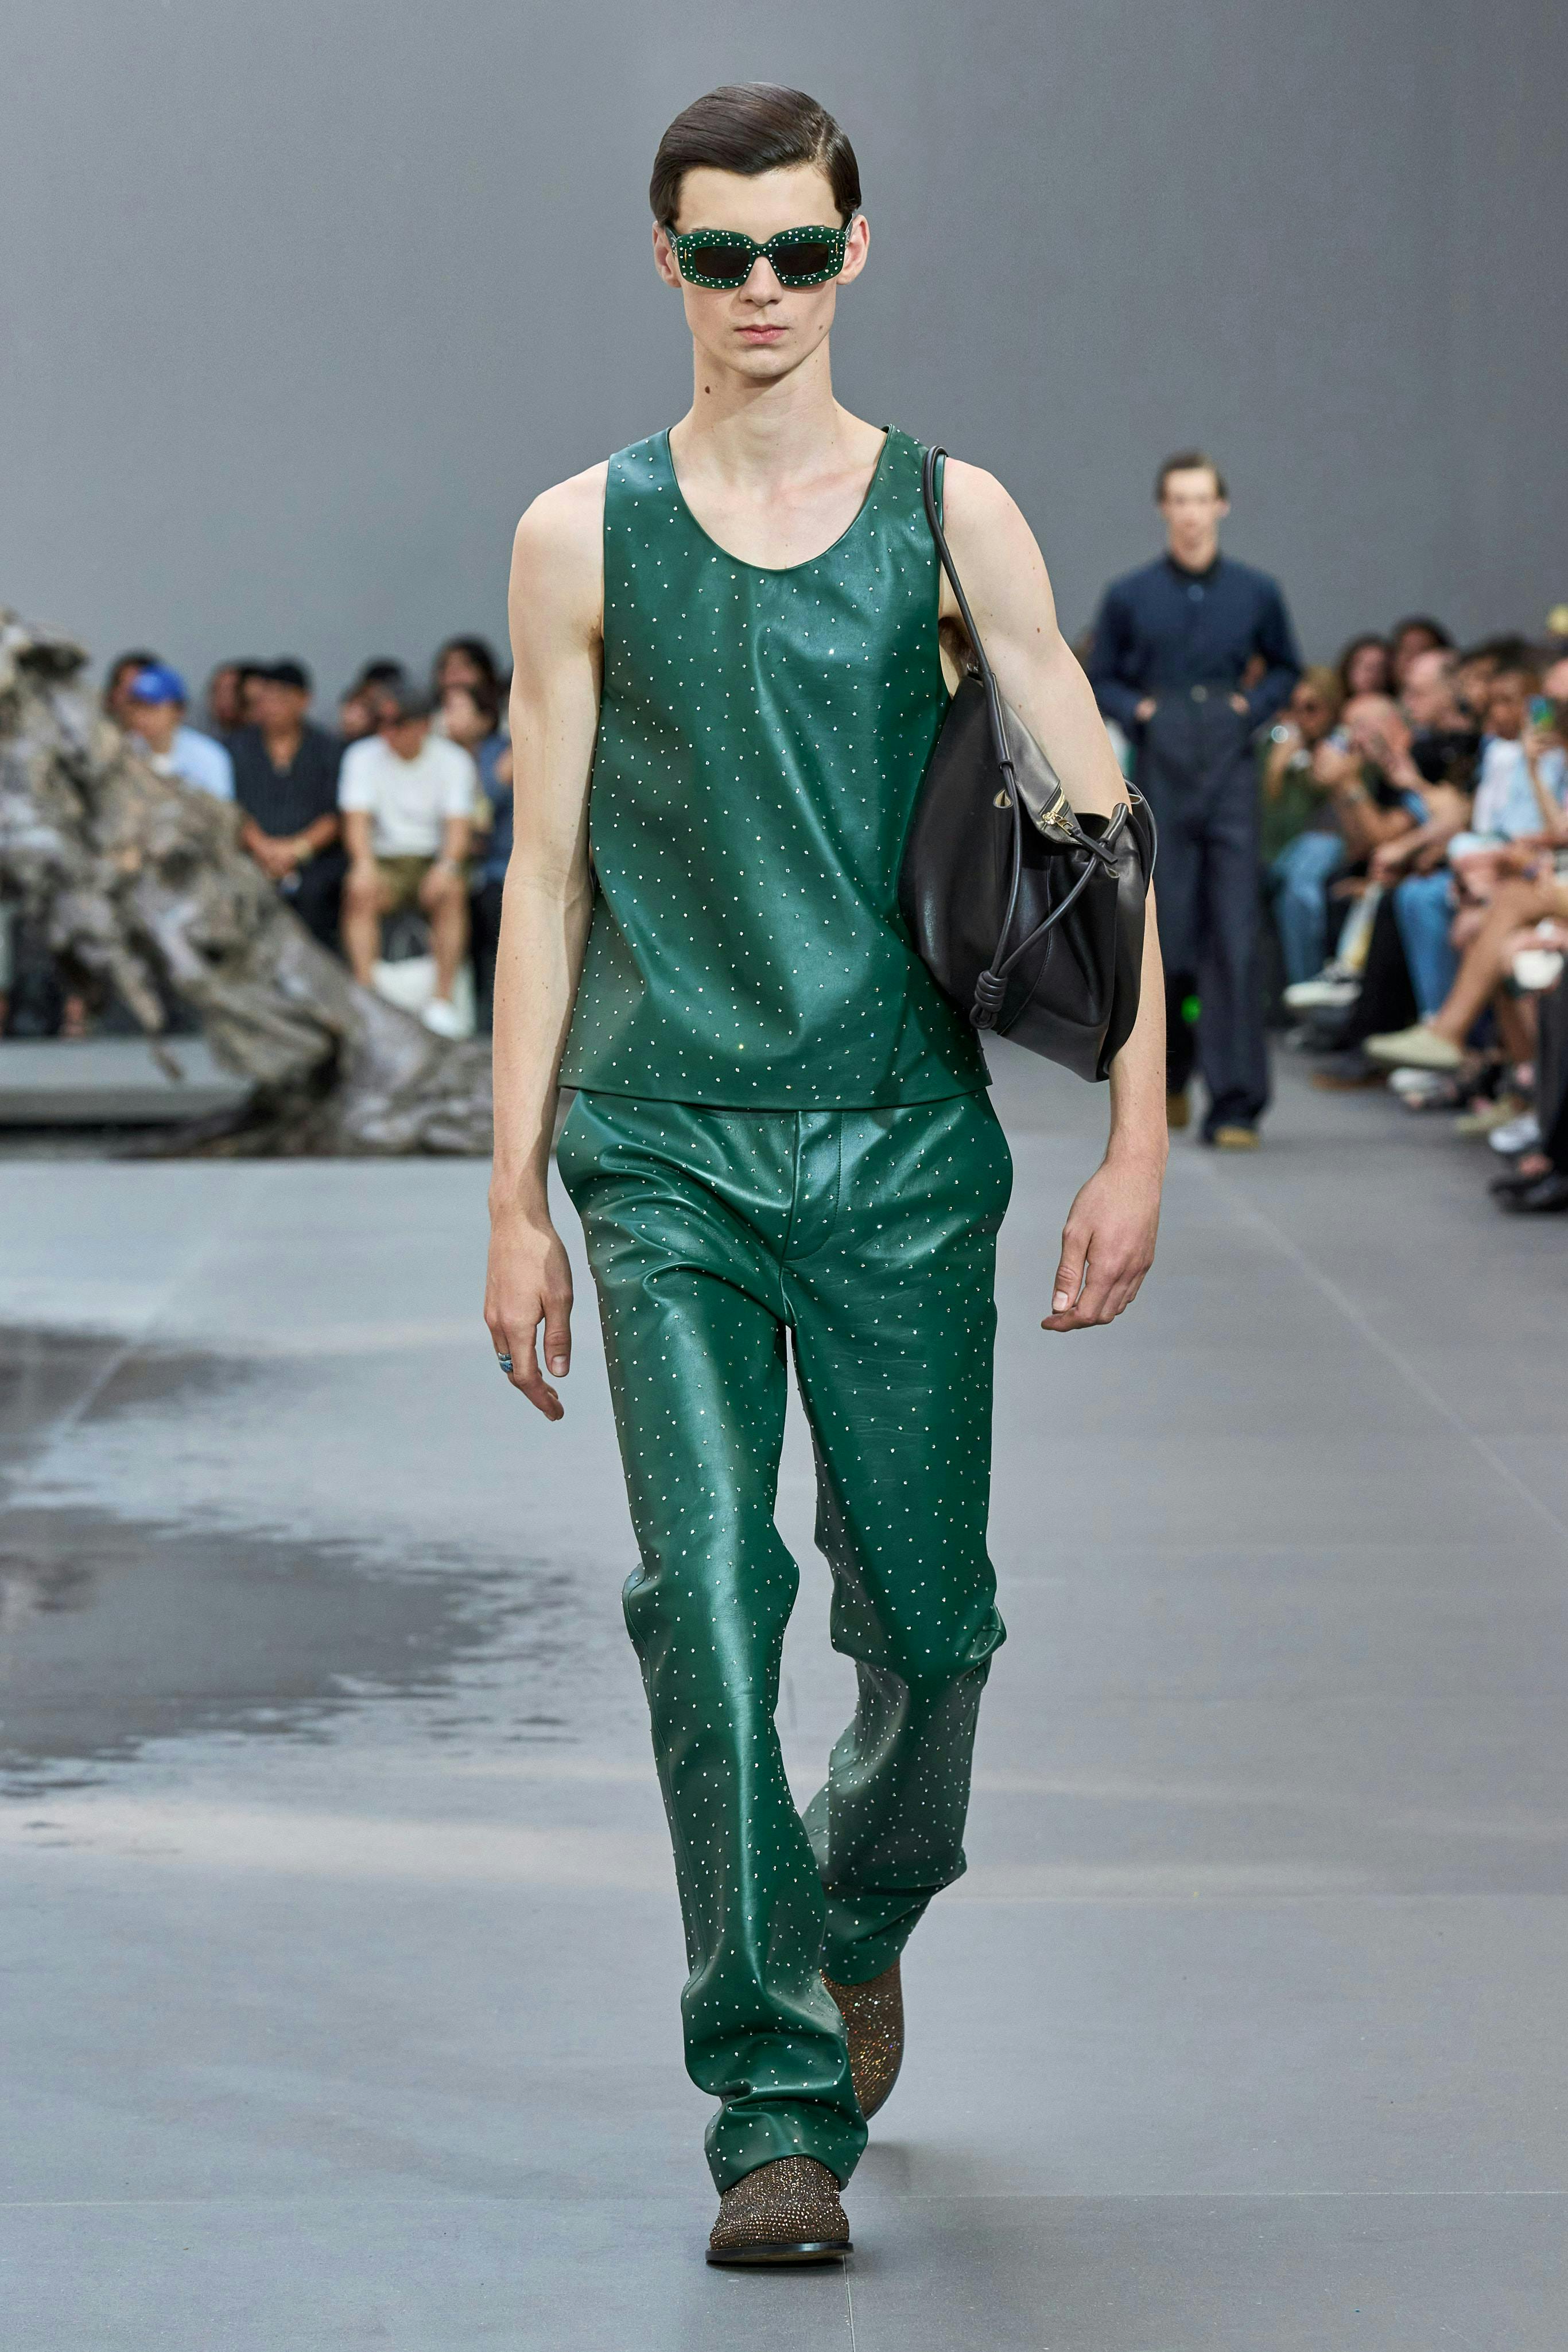 fashion clothing pants formal wear handbag adult male man person pajamas